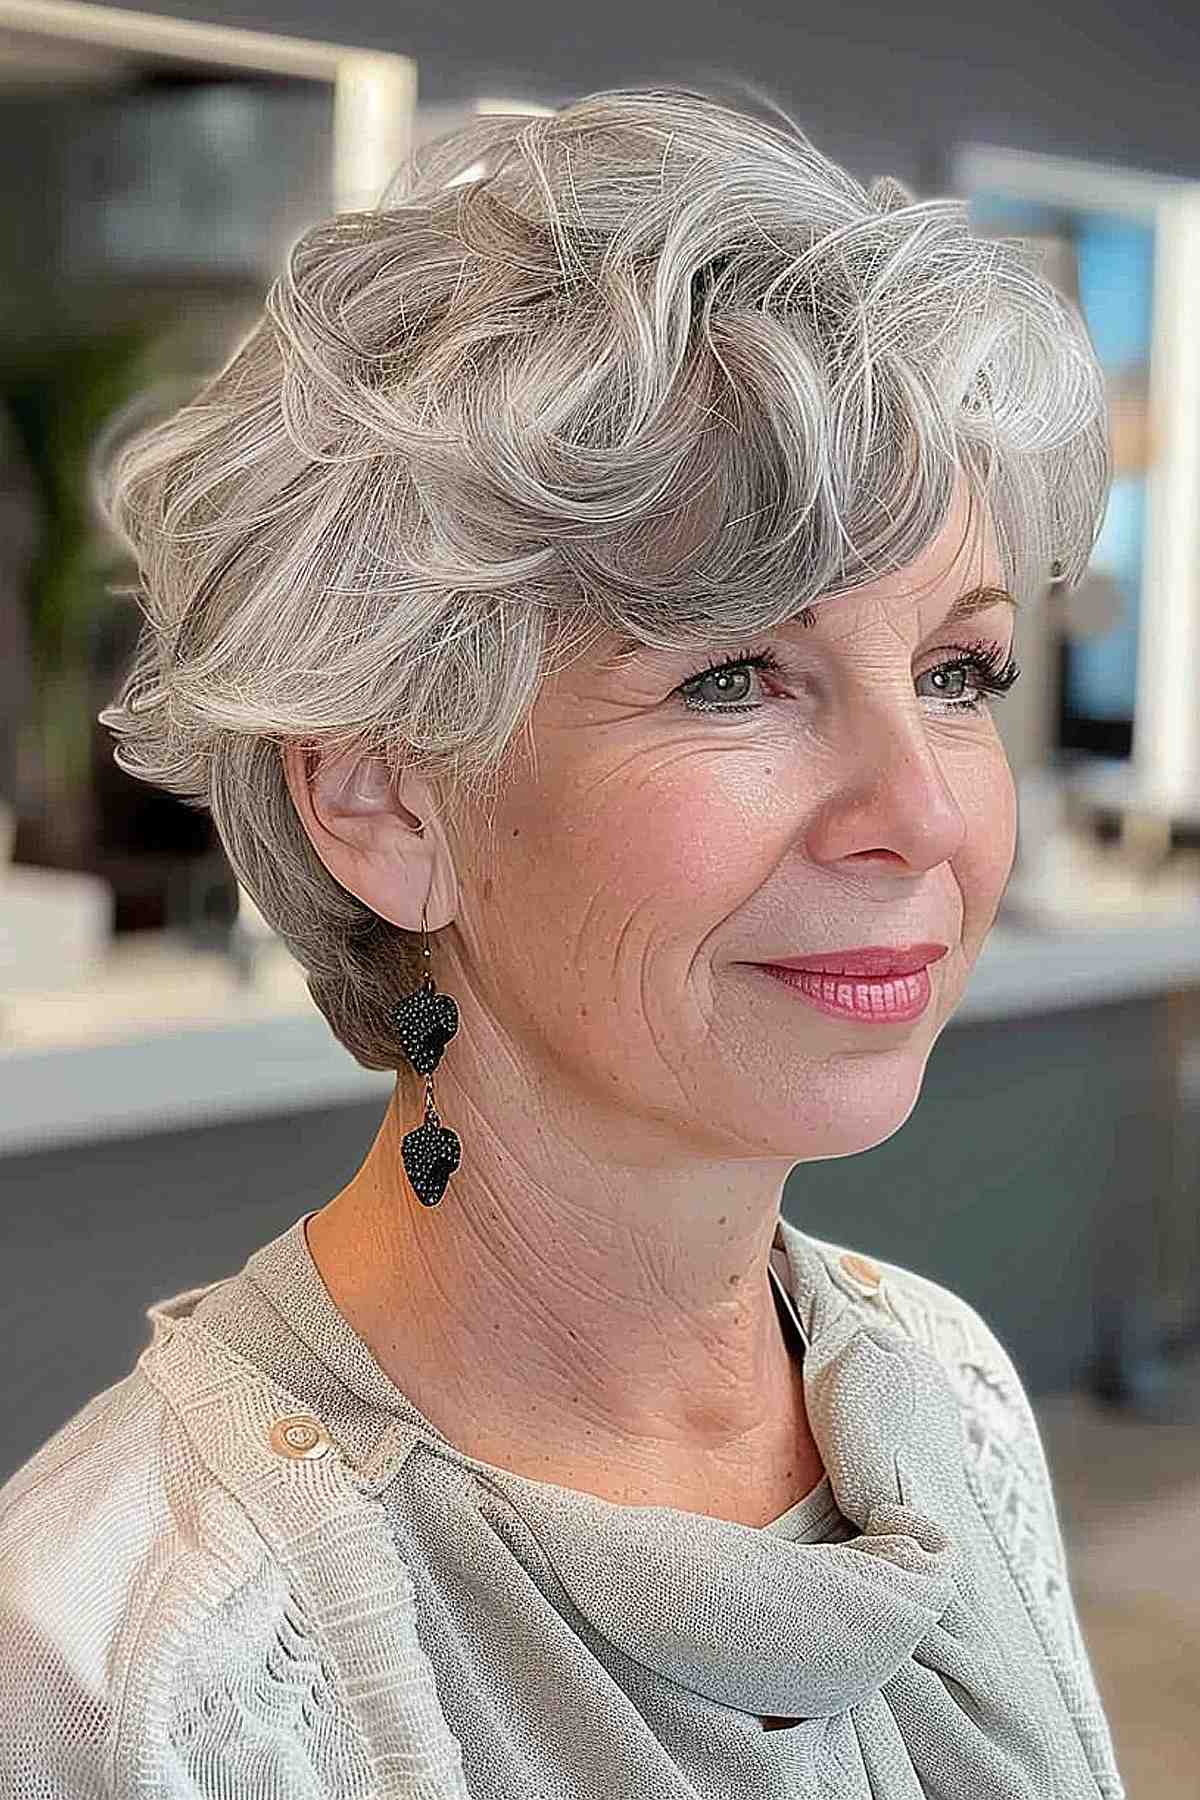 Flattering short shag haircut for older women with natural grey hair